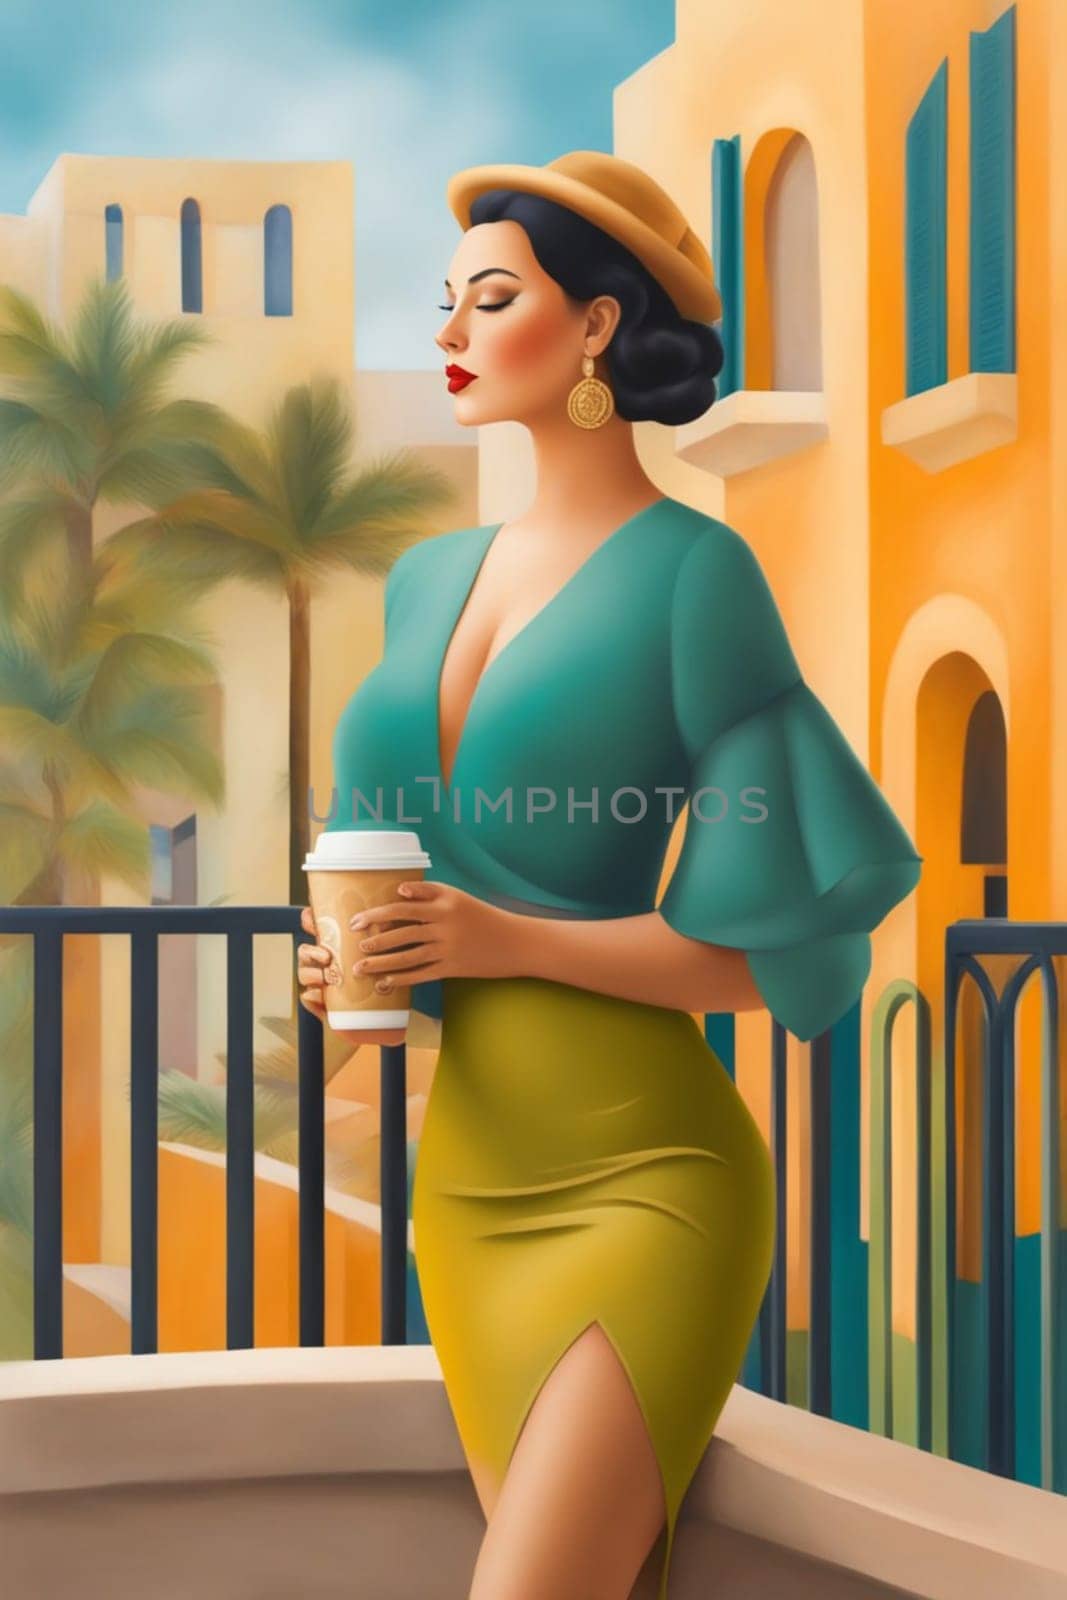 iilustration of voluptous female model having latte macchiato relax outdoors poolside in villagenerative ai art